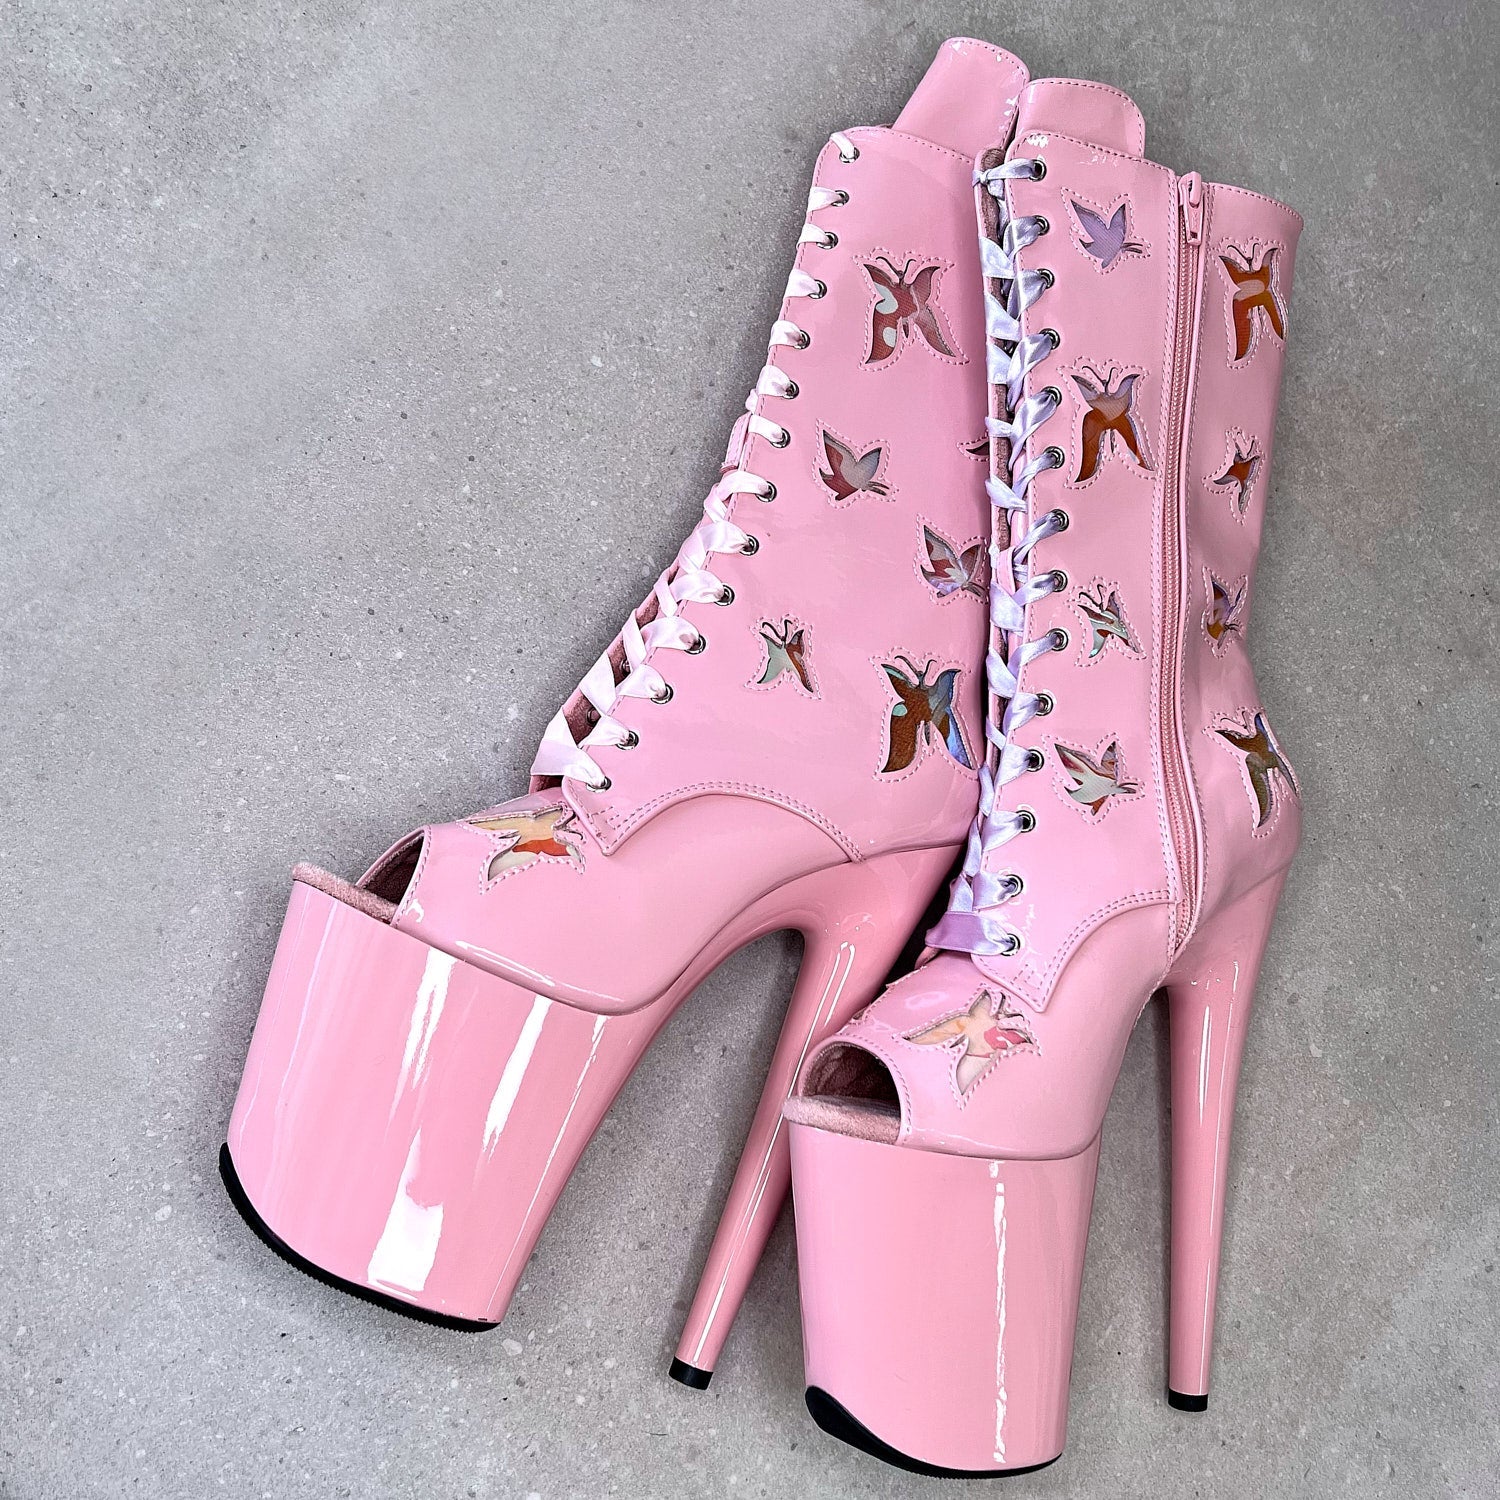 Butterfly Boot Pink Open Toe - 8INCH, stripper shoe, stripper heel, pole heel, not a pleaser, platform, dancer, pole dance, floor work